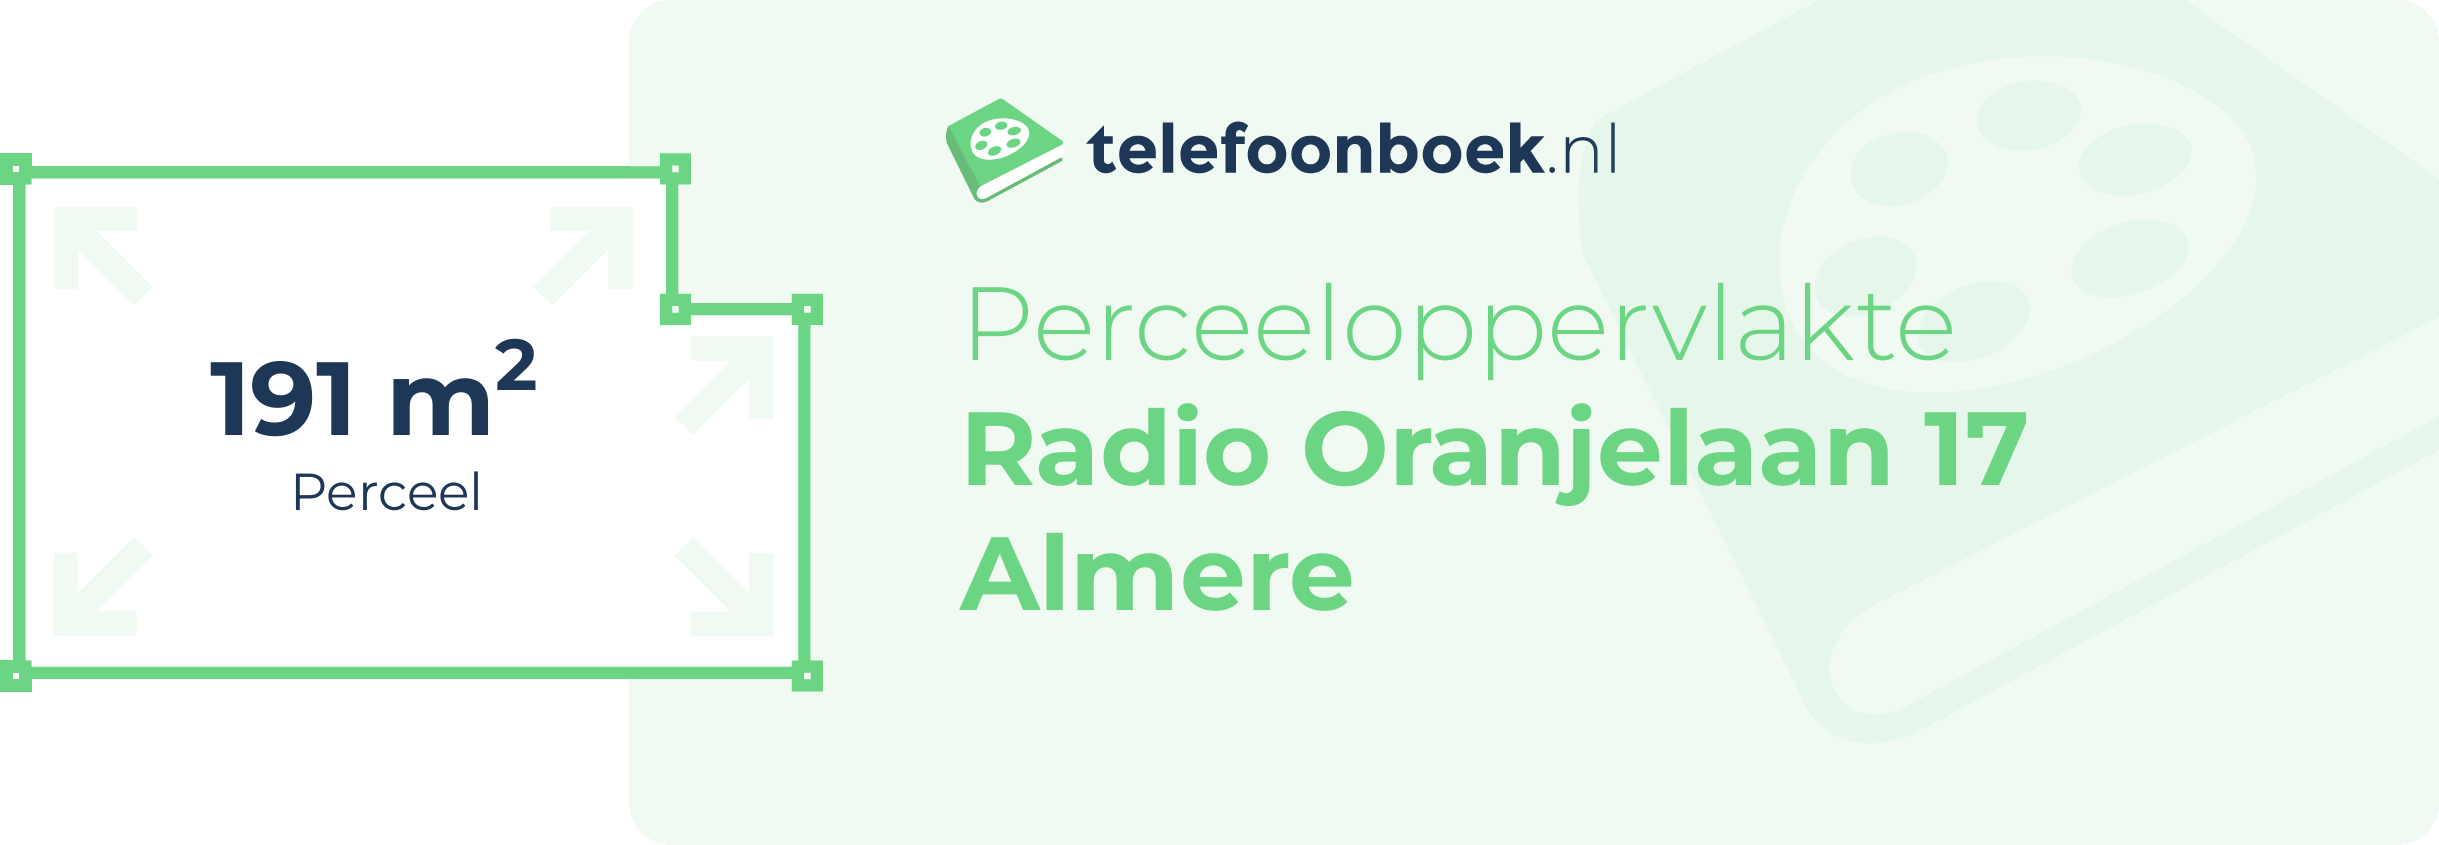 Perceeloppervlakte Radio Oranjelaan 17 Almere